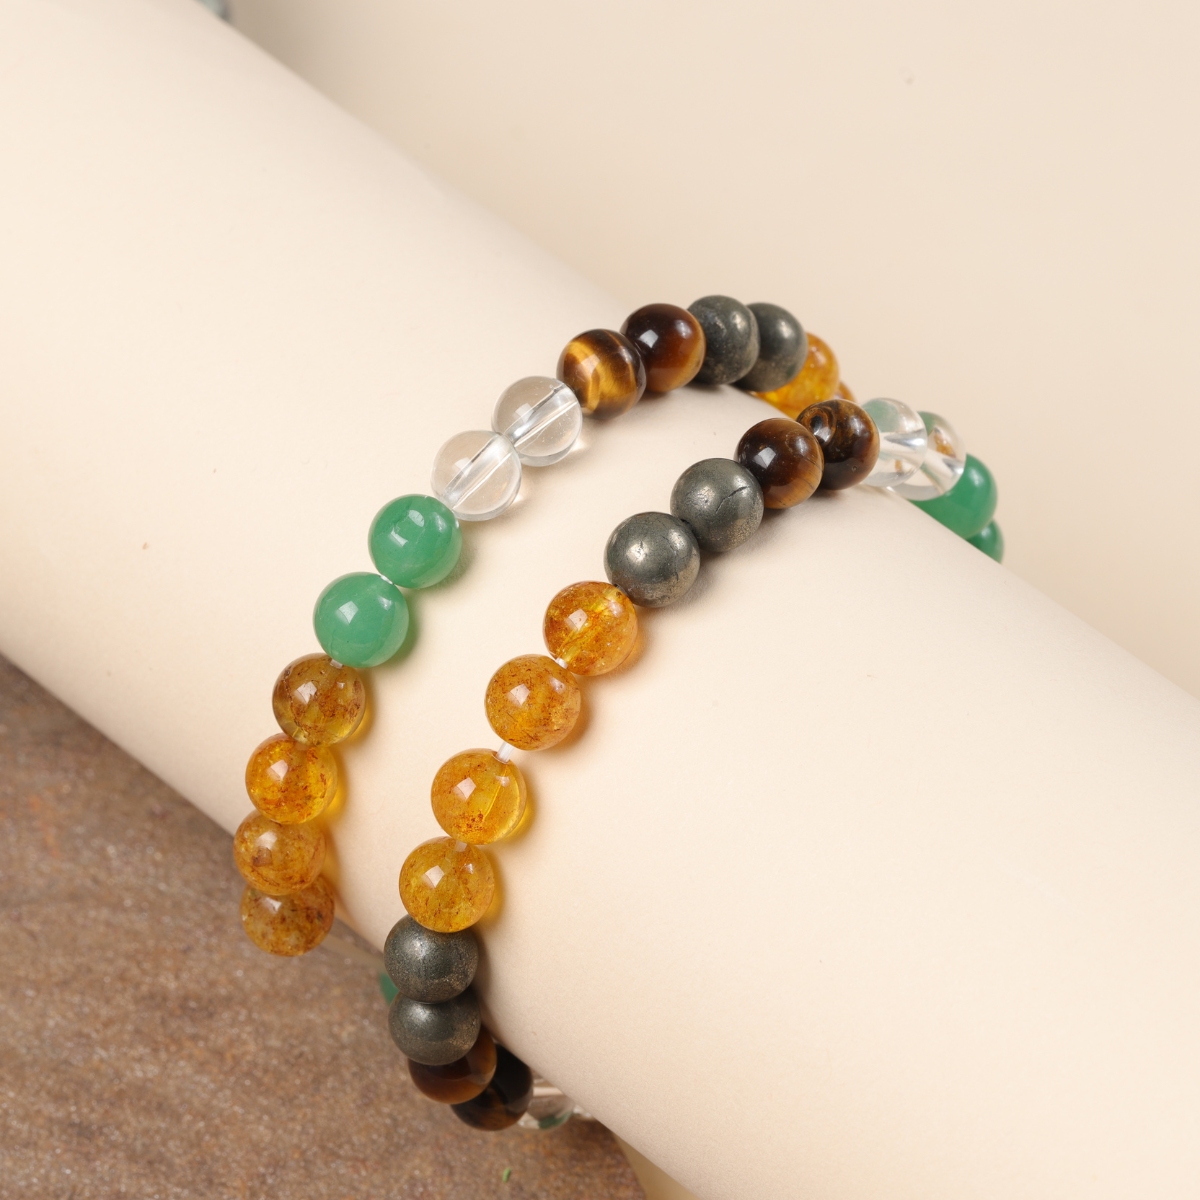 Healing crystal bracelet for abundance and luck.